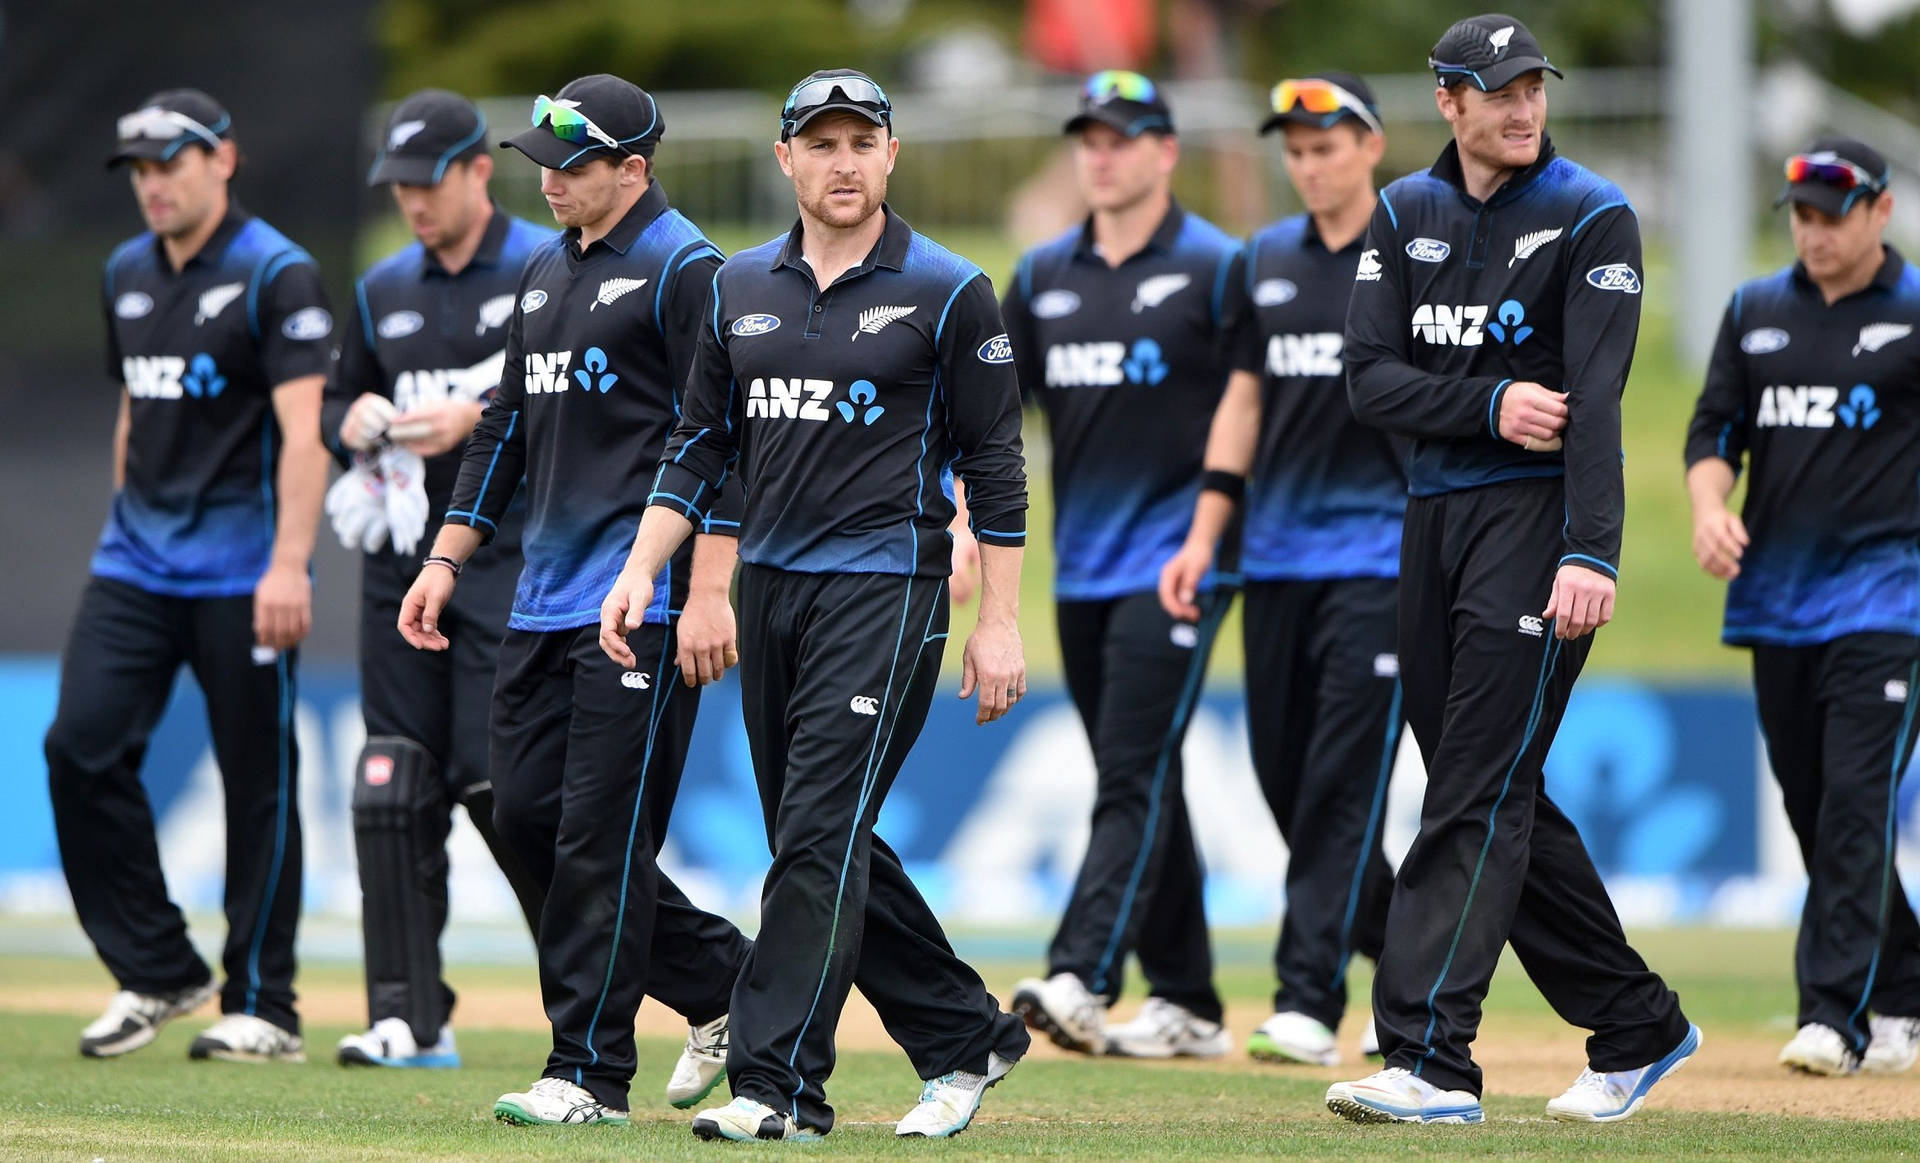 New zealand number. New Zealand Cricket. Крикет в новой Зеландии. New Zealand Cricket игроки. Известные люди новой Зеландии.